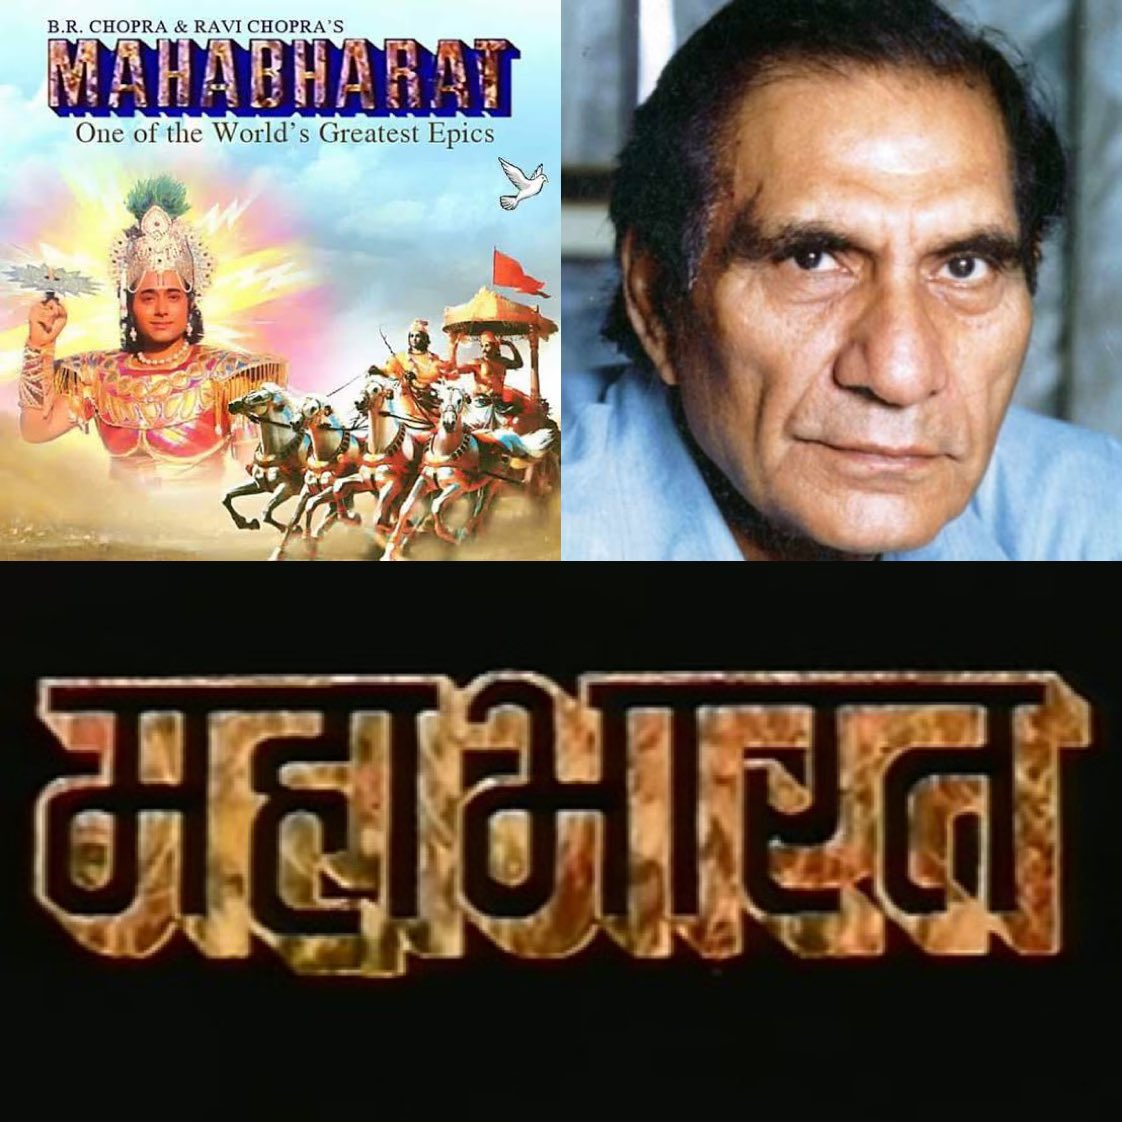 The man who gave #90skids #mahabharat on #doordarshan #happybirthdaybrchopra 

#90skatv on my show #90skicassettewithmanjula on gaana.com/song/ep-17-90s…

#90stvshows on my YouTube channel #rjmanjula on youtube.com/rjmanjula

#90smahabharat #doordarshanmahabharat #90sindiantvshow